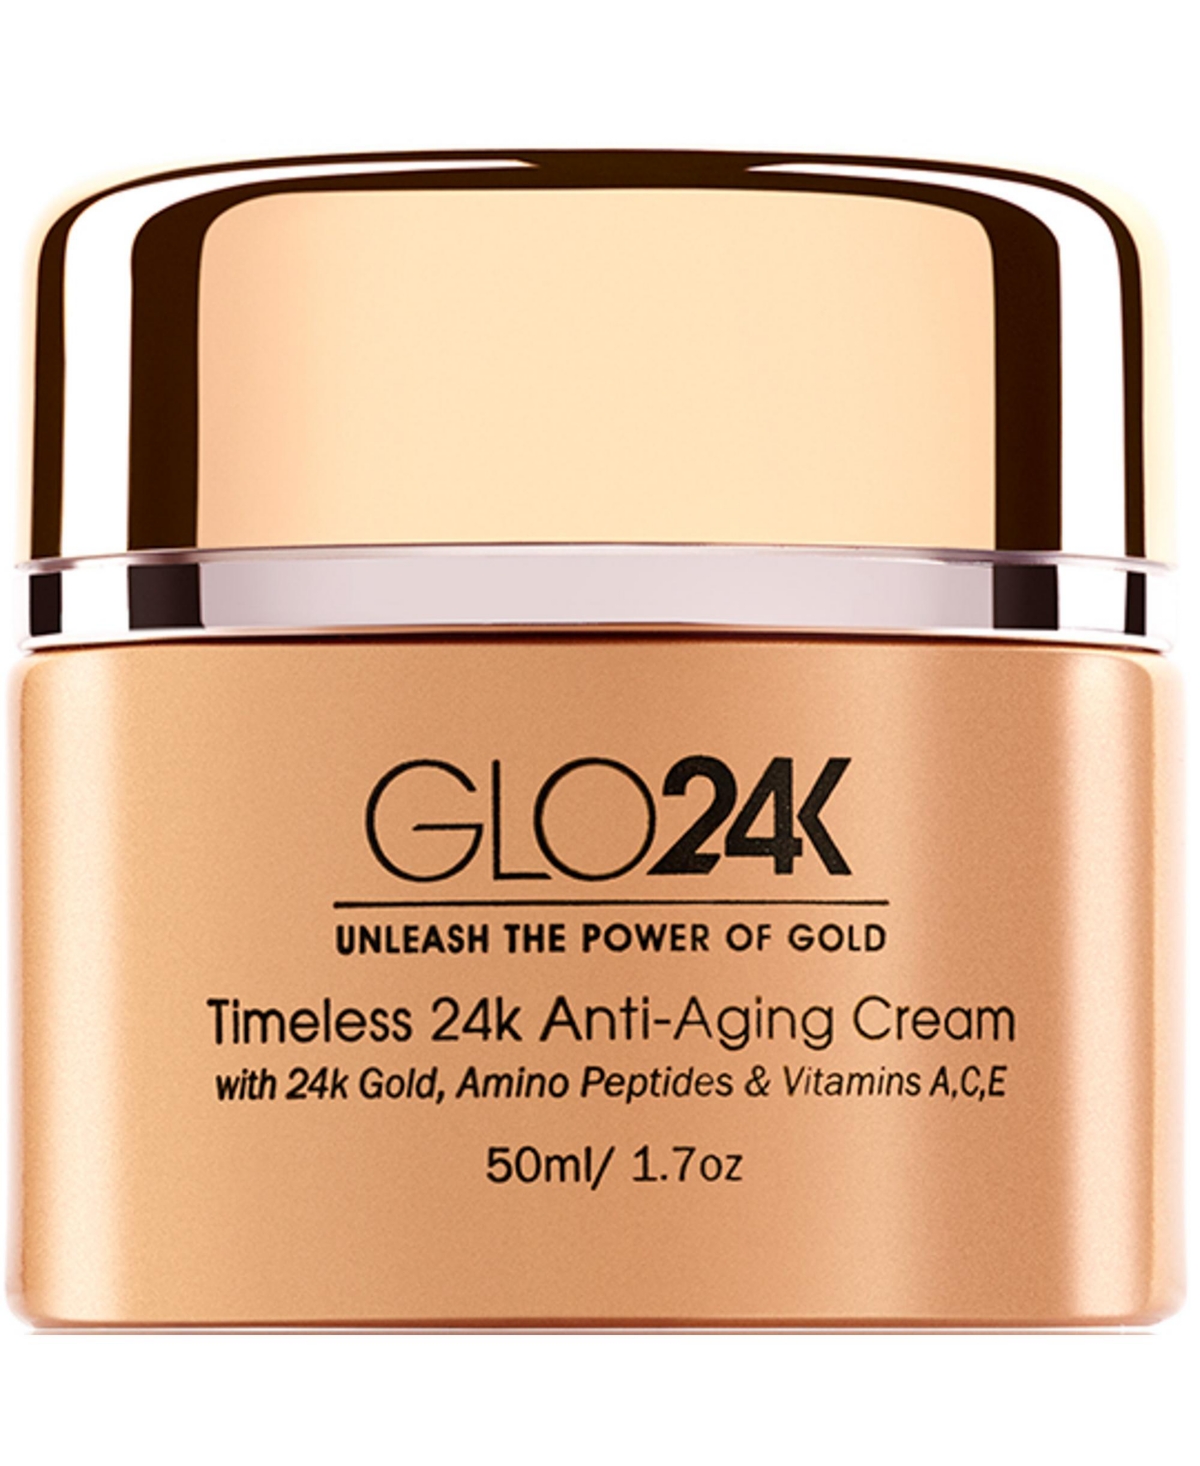 Timeless 24K Anti-Aging Cream 1.7oz